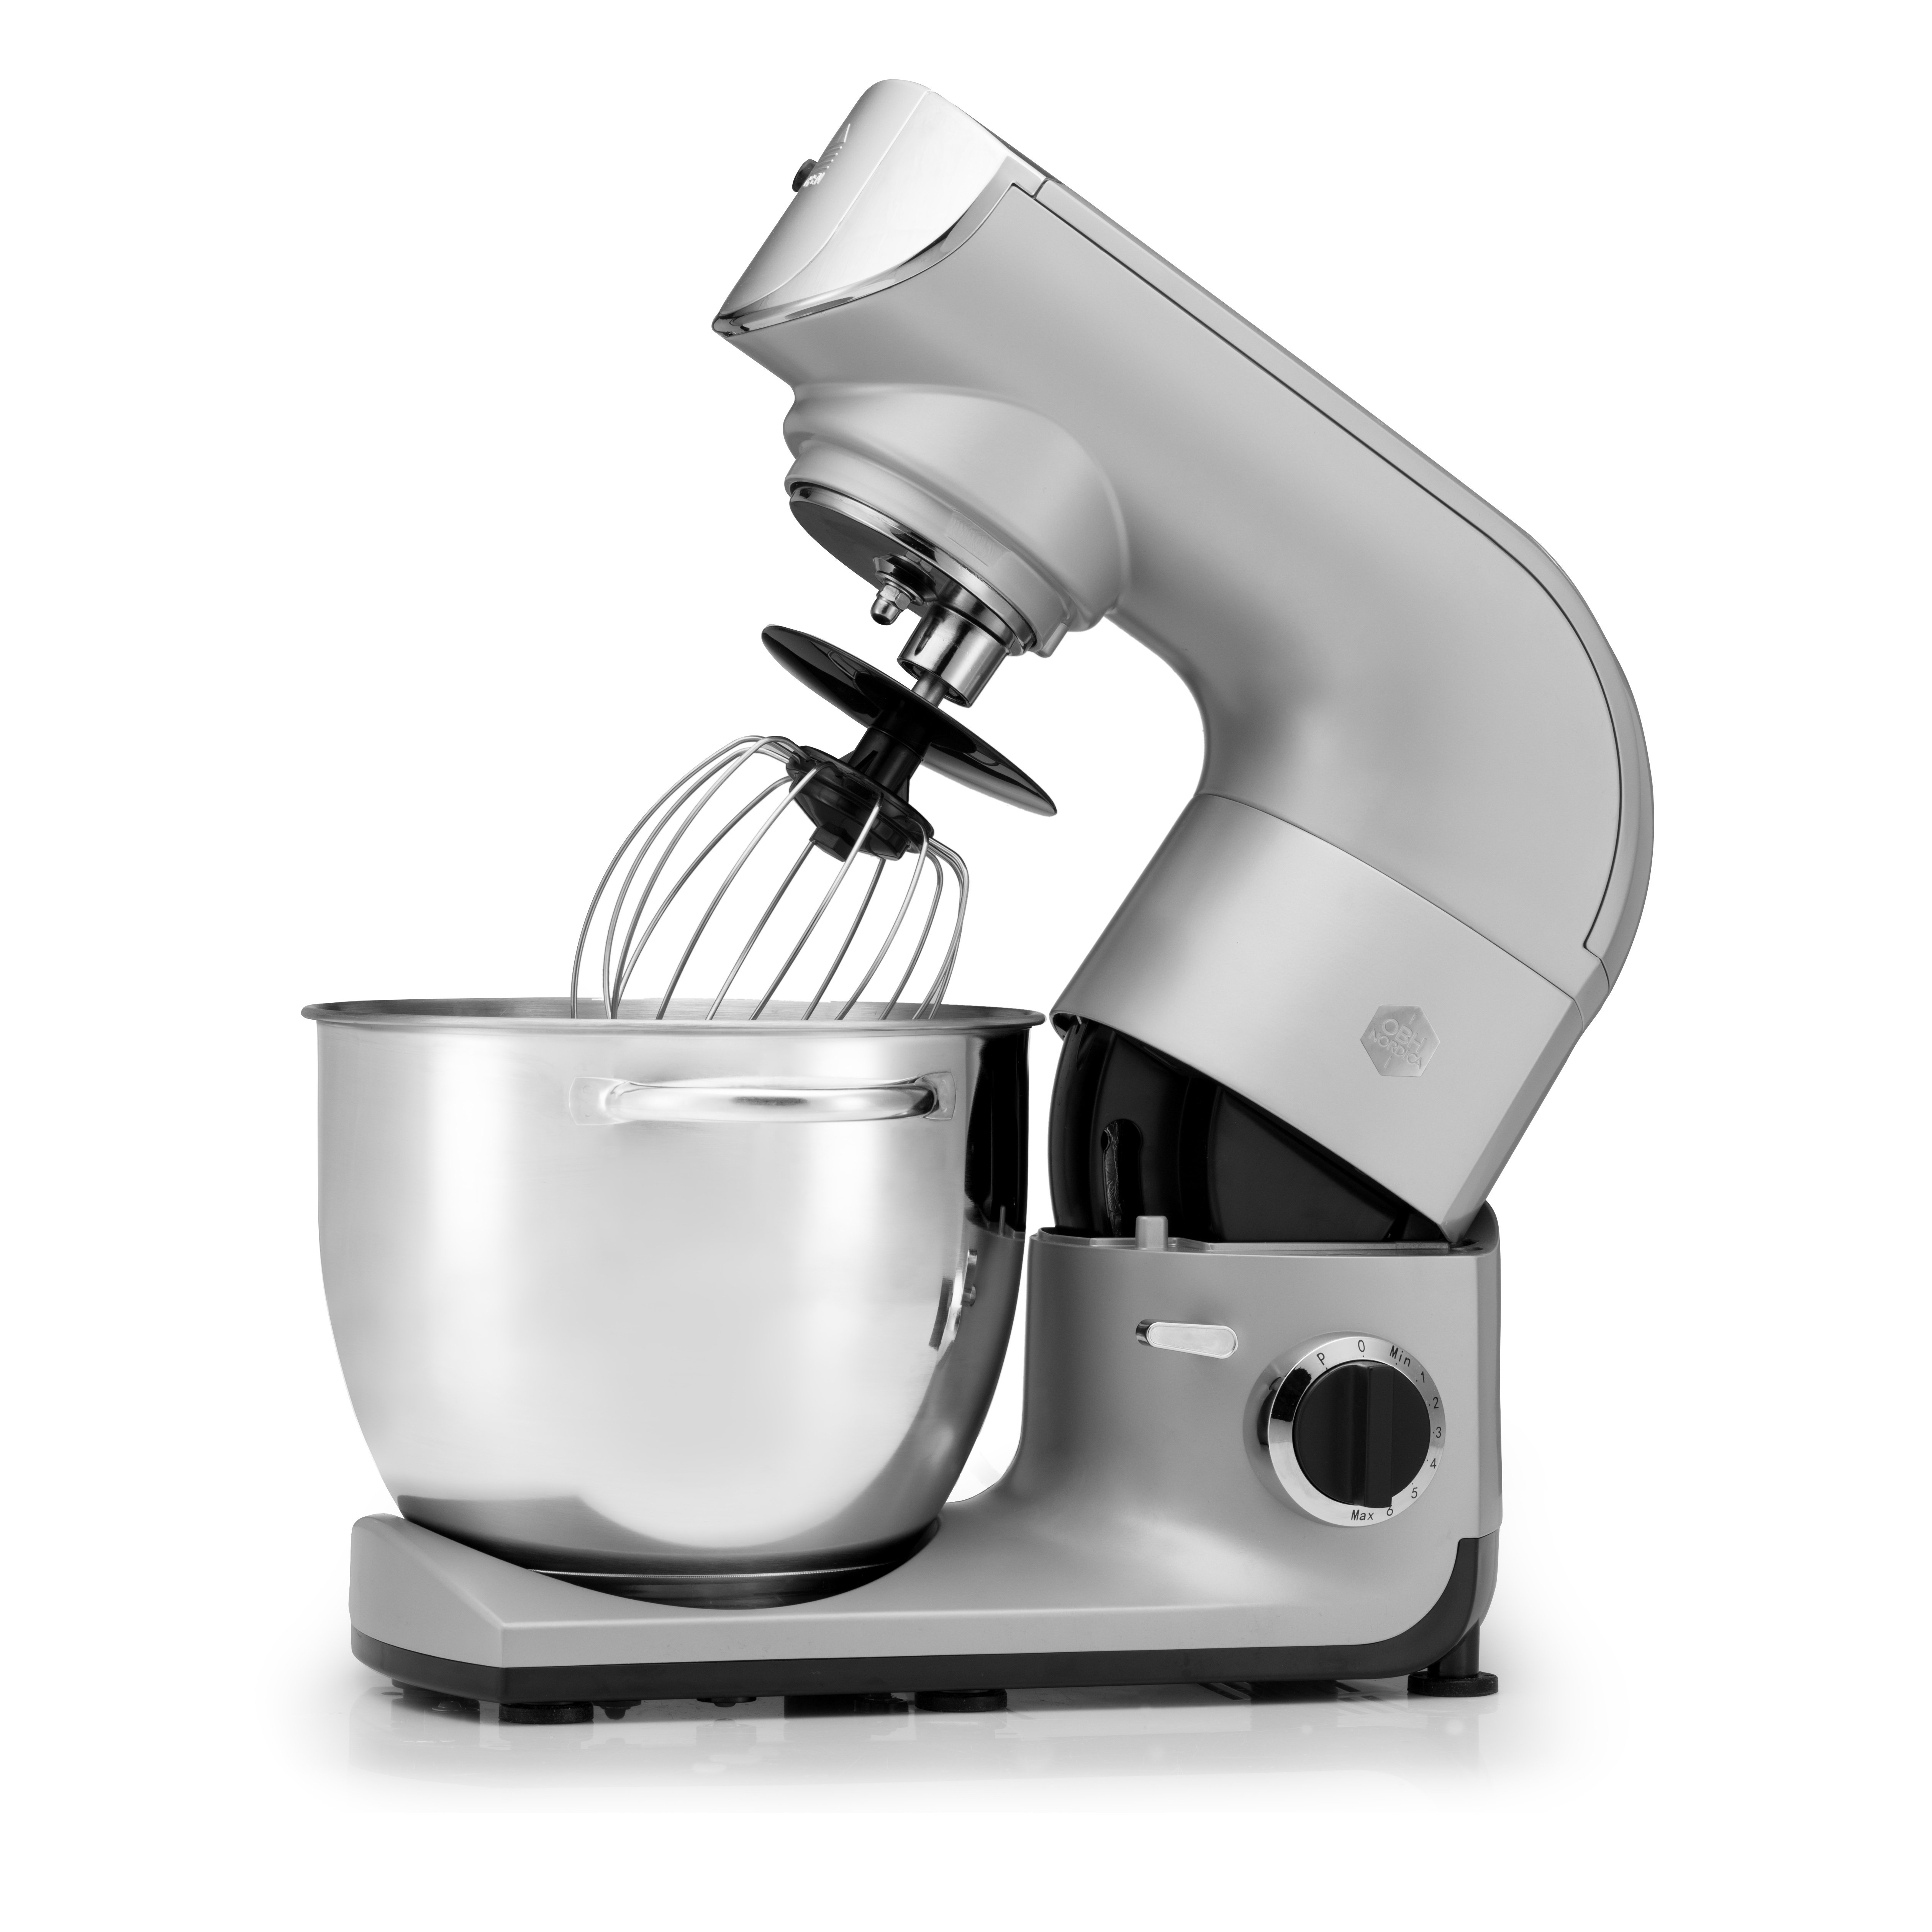 Buy OBH Nordica - 1200 Kitchen Machine - Silver (6801)